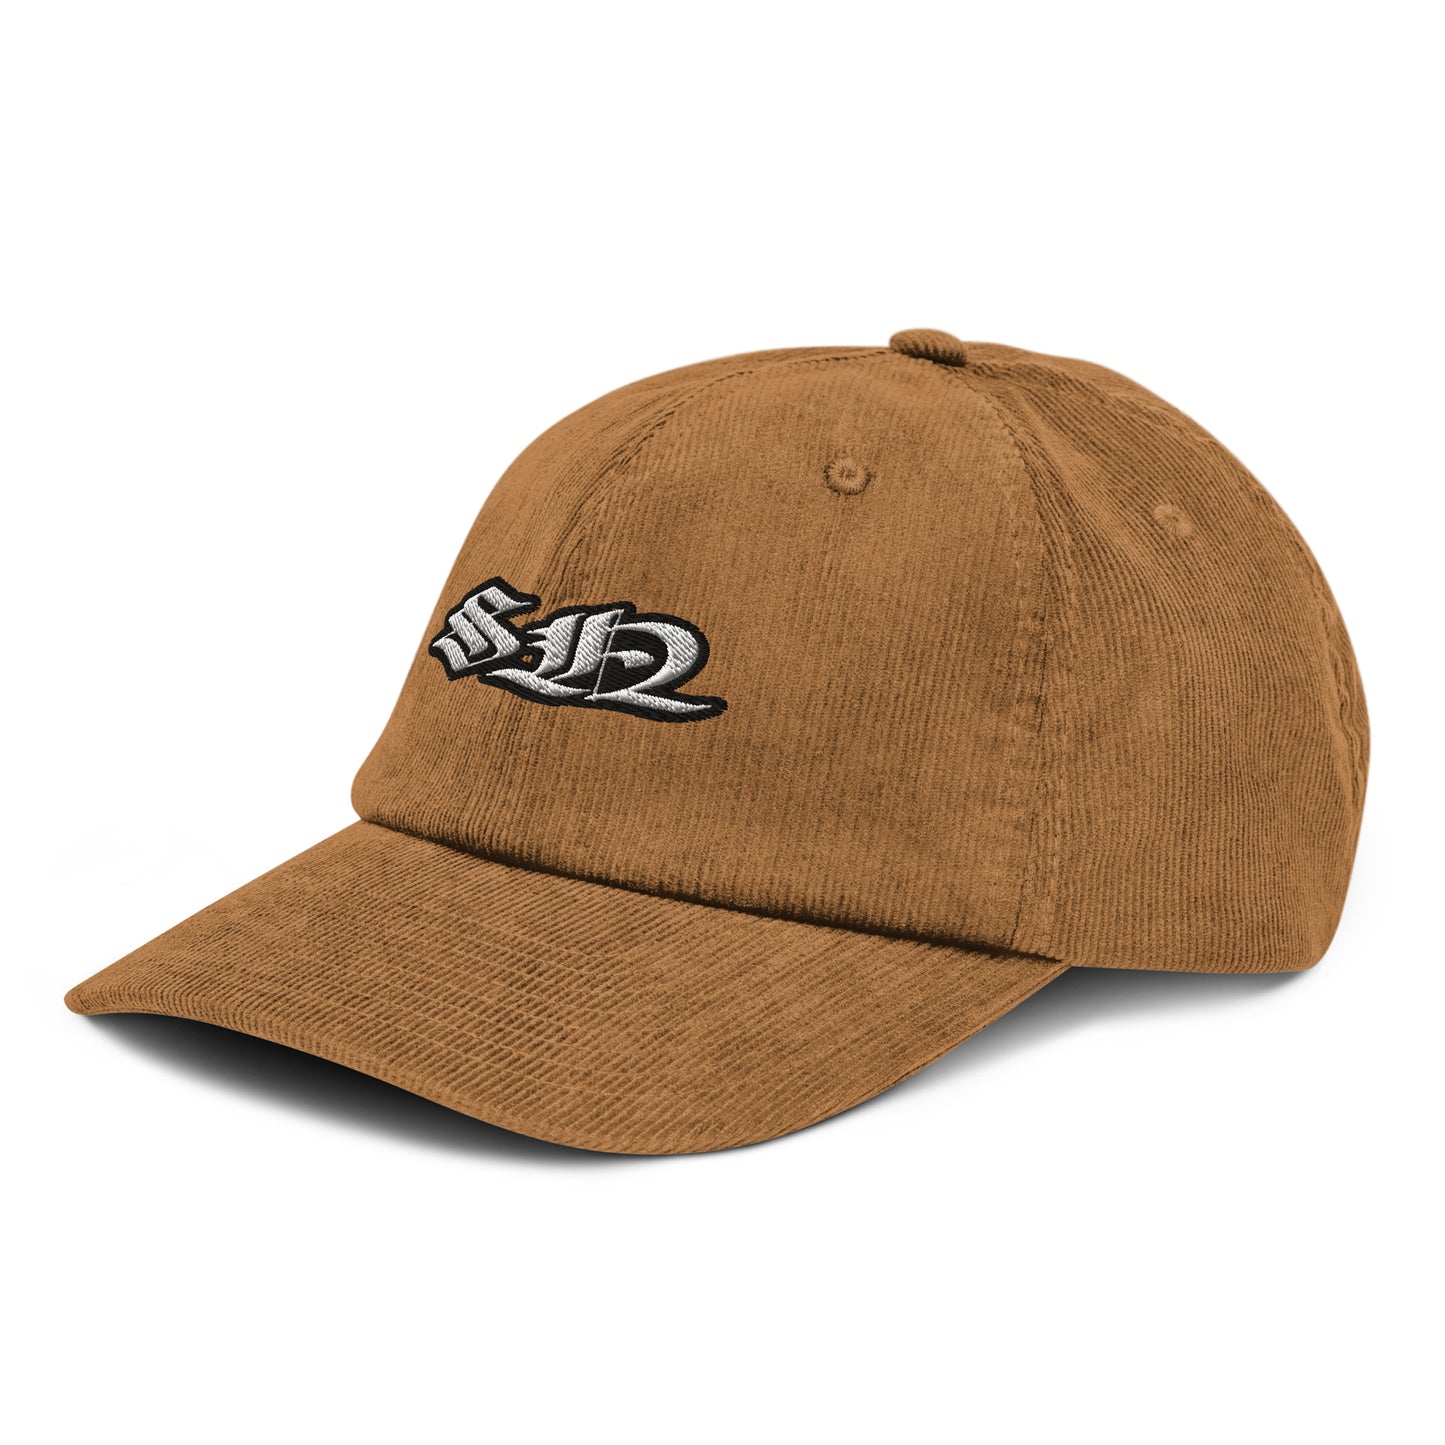 SN Corp embroidered velvet cap